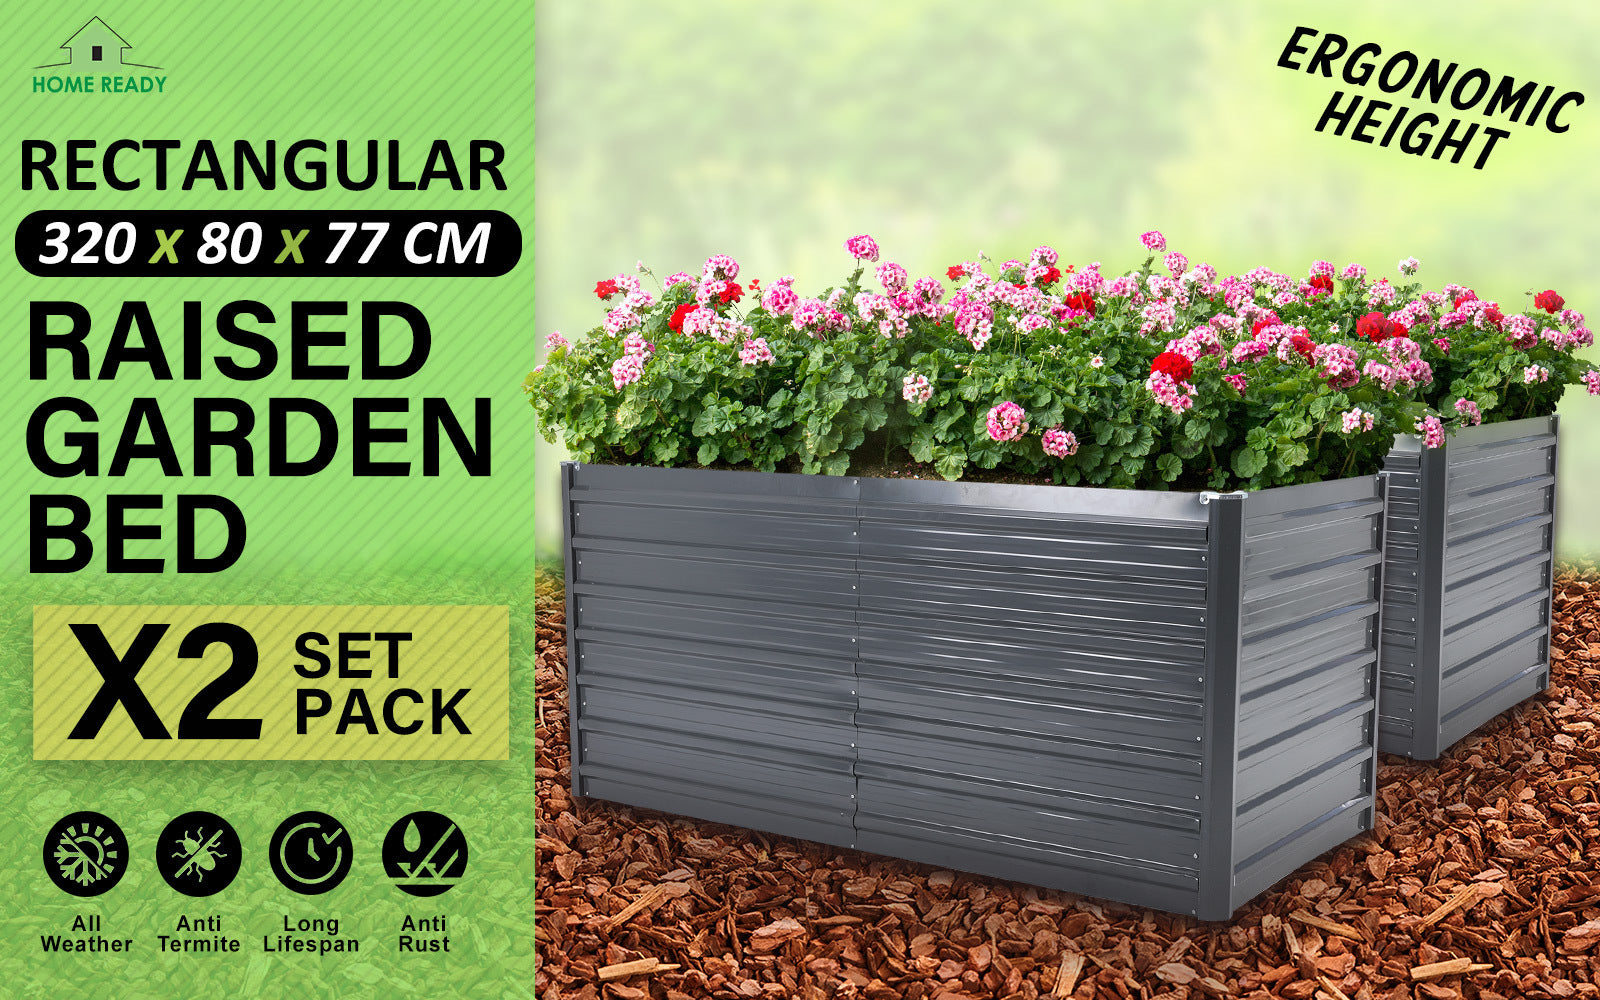 2 Set 320 x 80 x 77cm Grey 2-in-1 Raised Garden Bed Galvanised Steel Planter